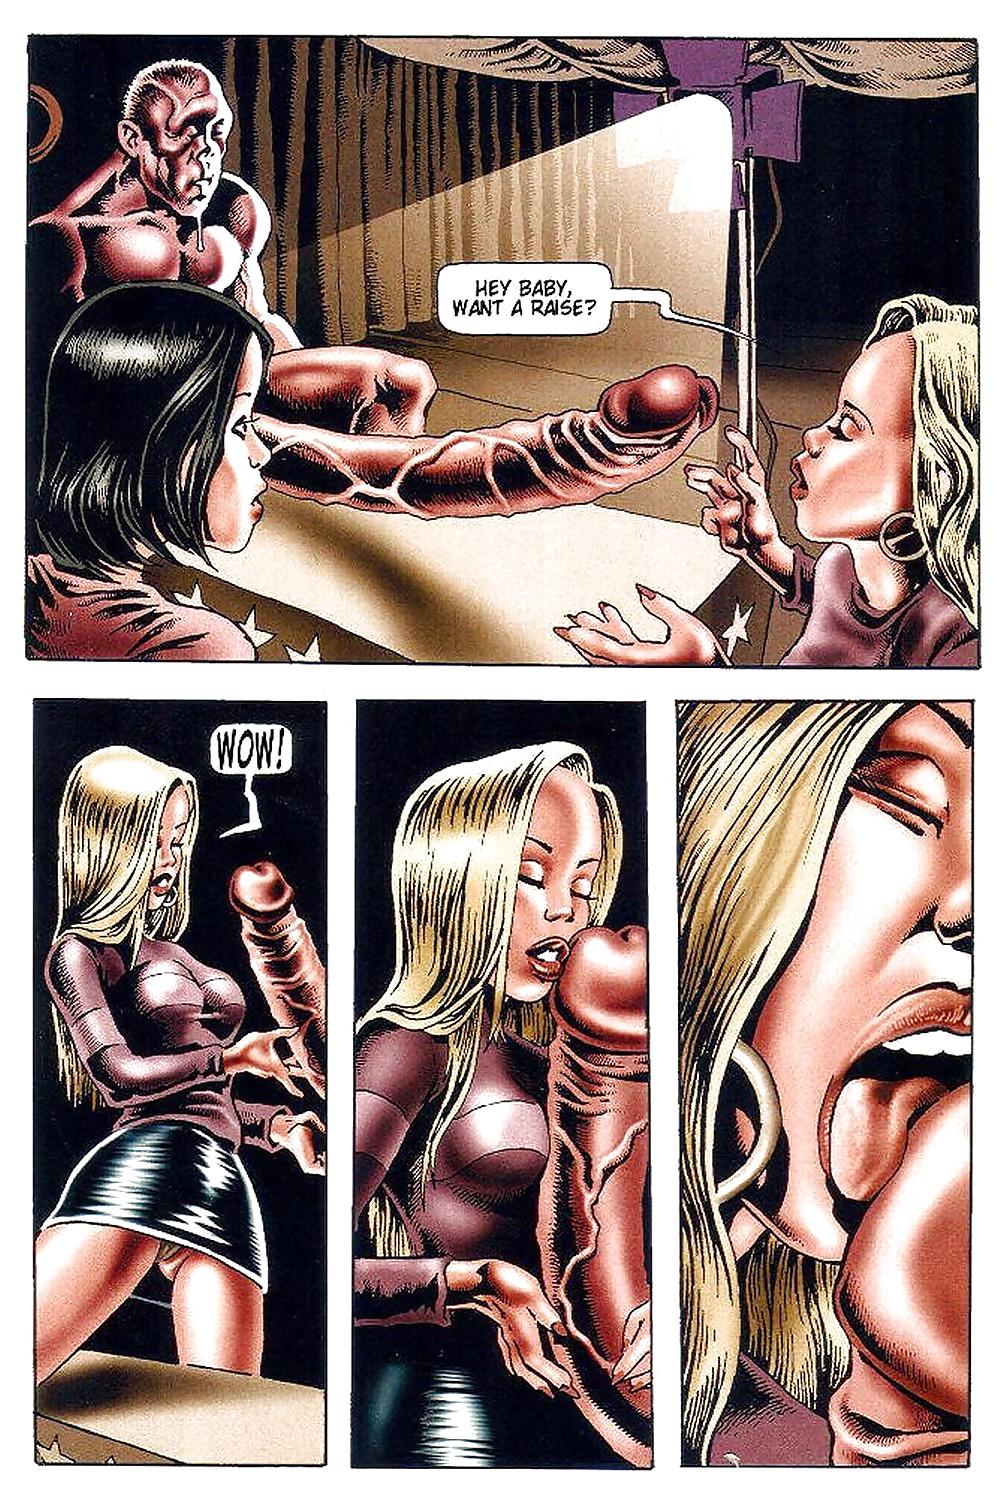 Mandrágora #1 - cómic de sexo
 #23291191